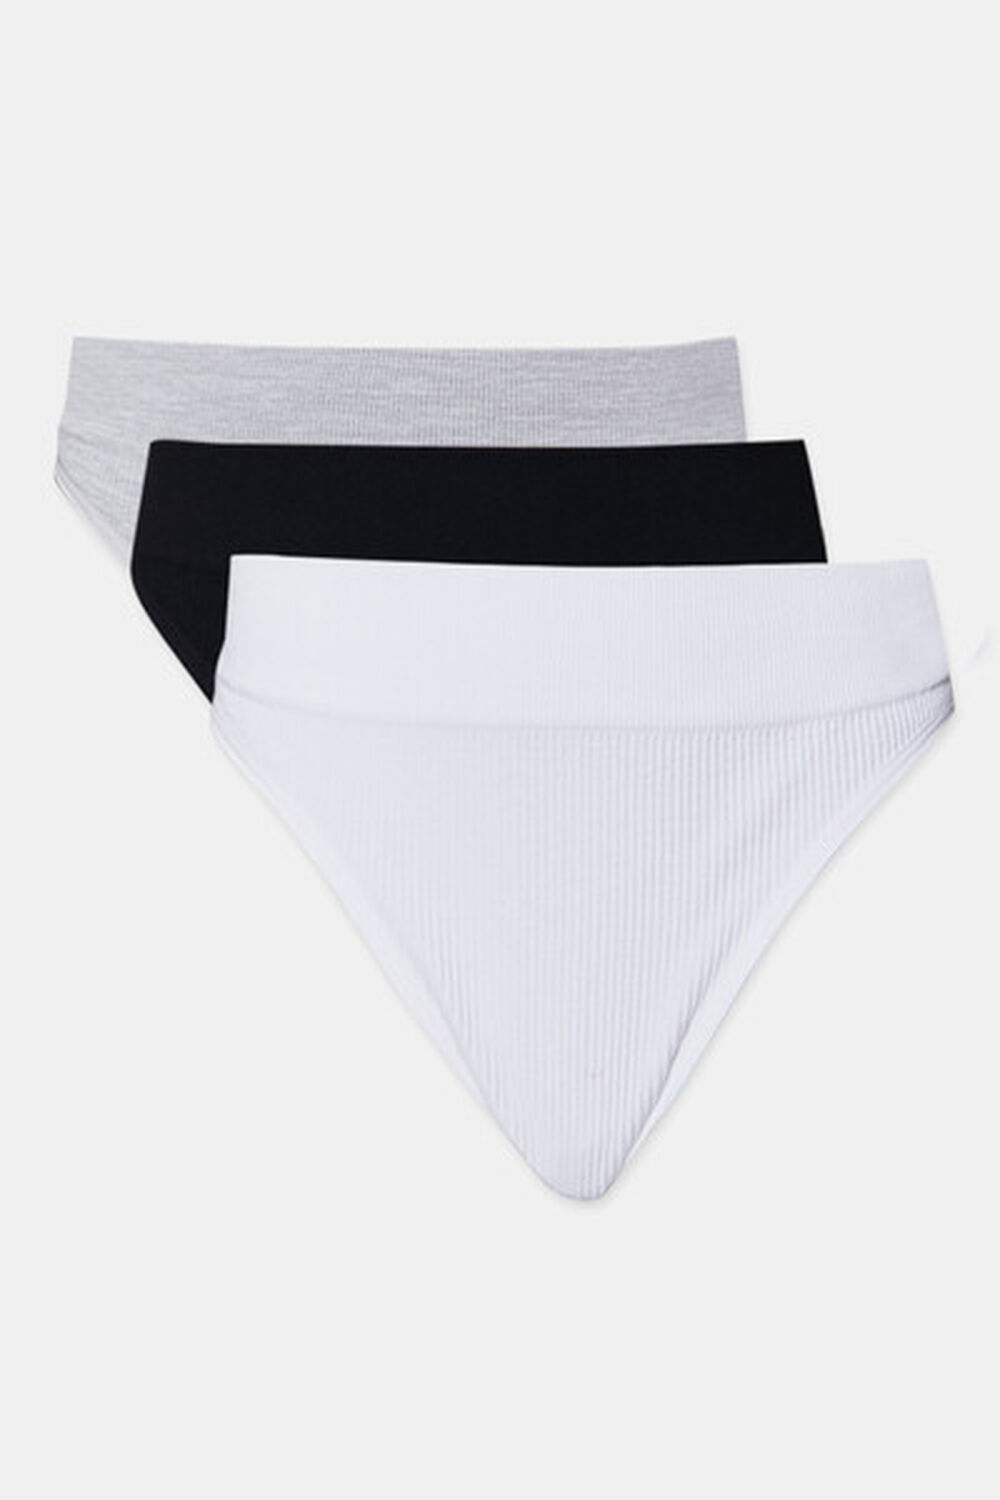 BLACK/WHITE Seamless Ribbed Panties Set - 3 Pack, image 1